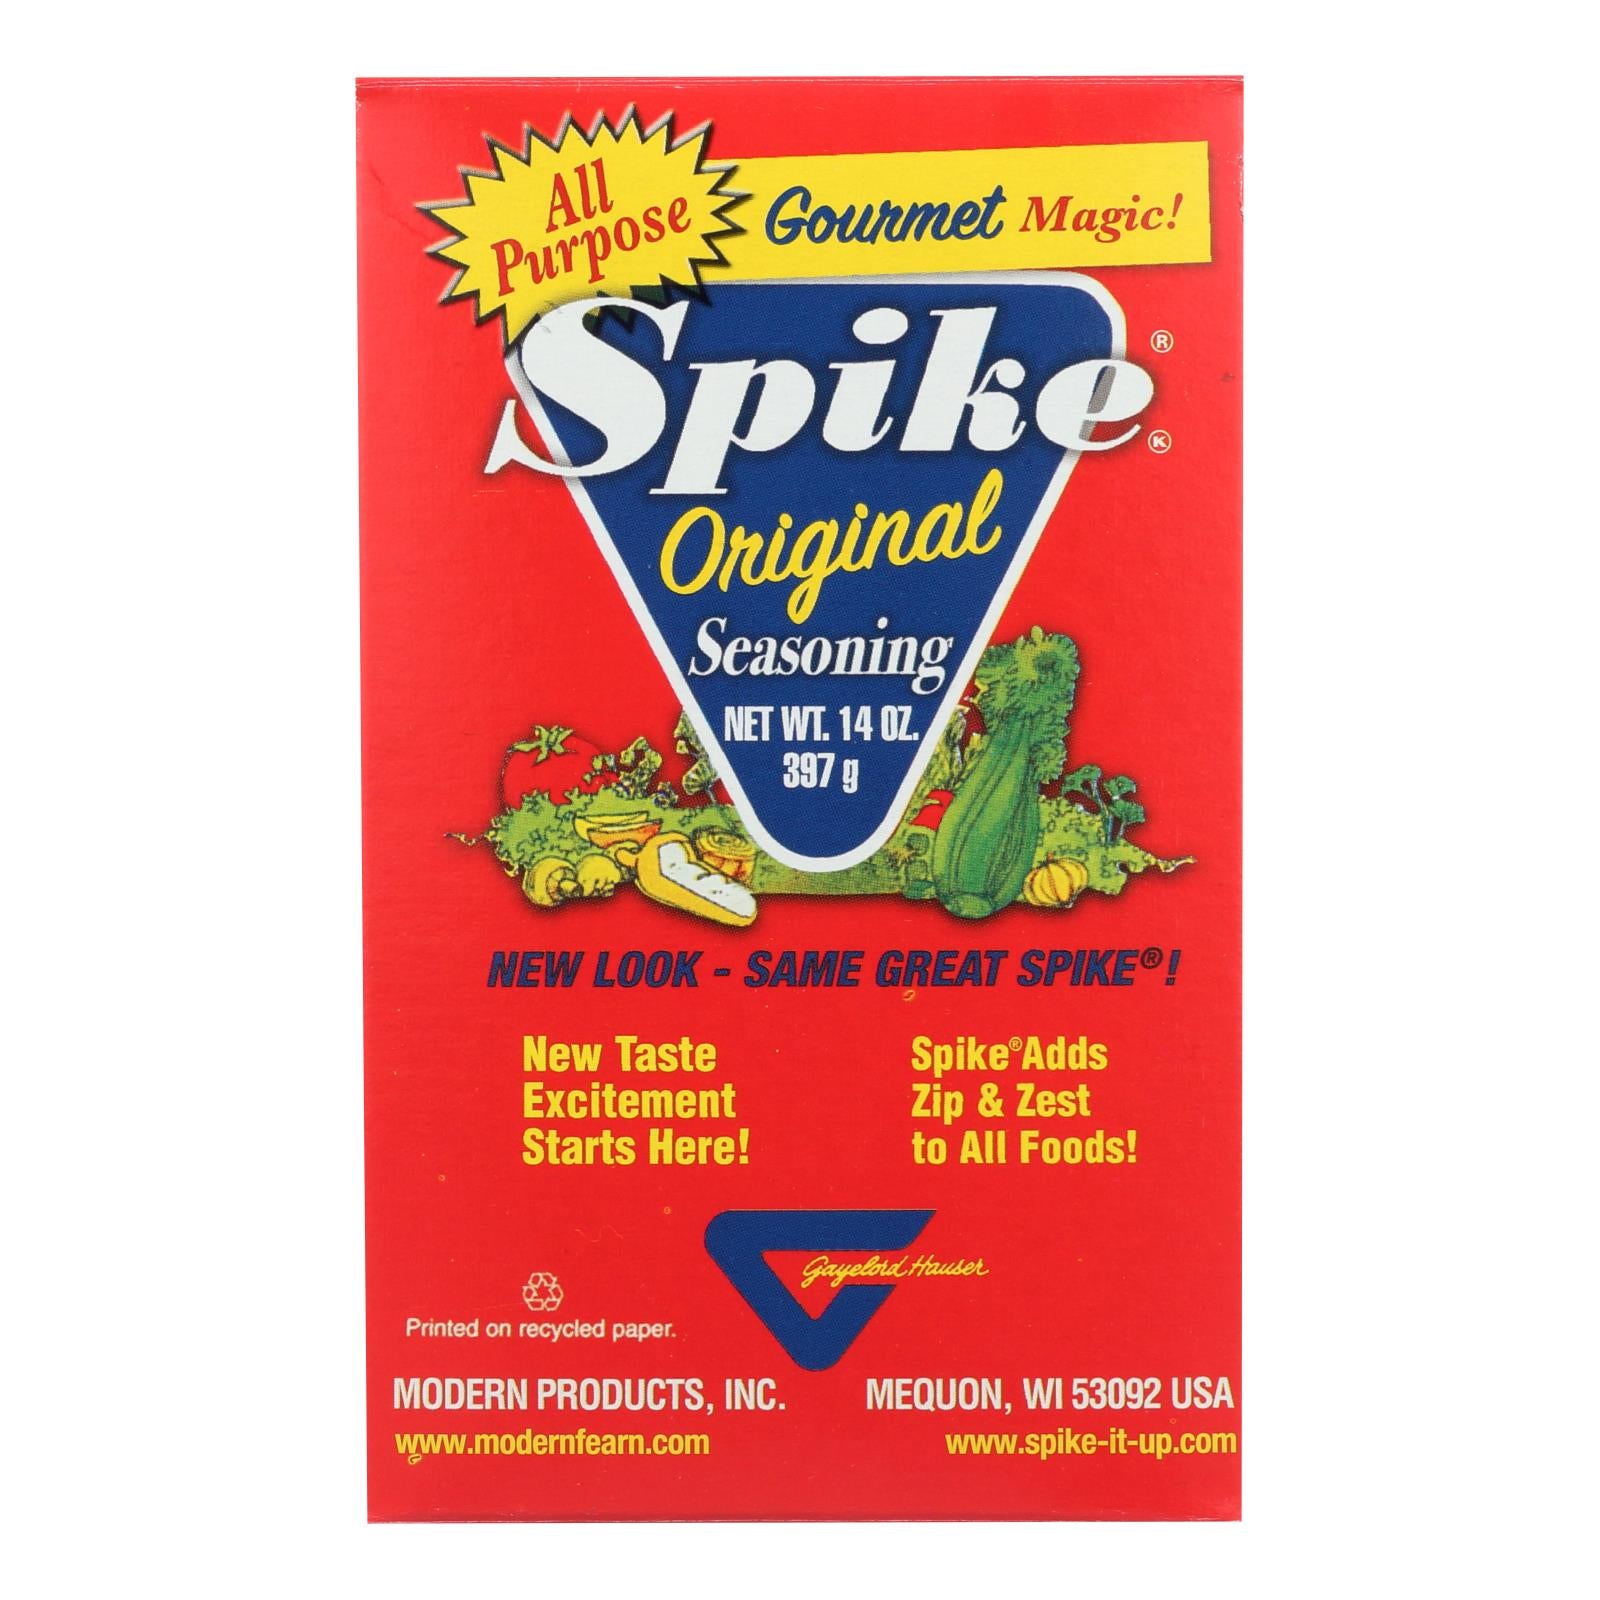 Modern Products, Modern Products Spike Gourmet Natural Seasoning - Original Magic - Box - 14 oz